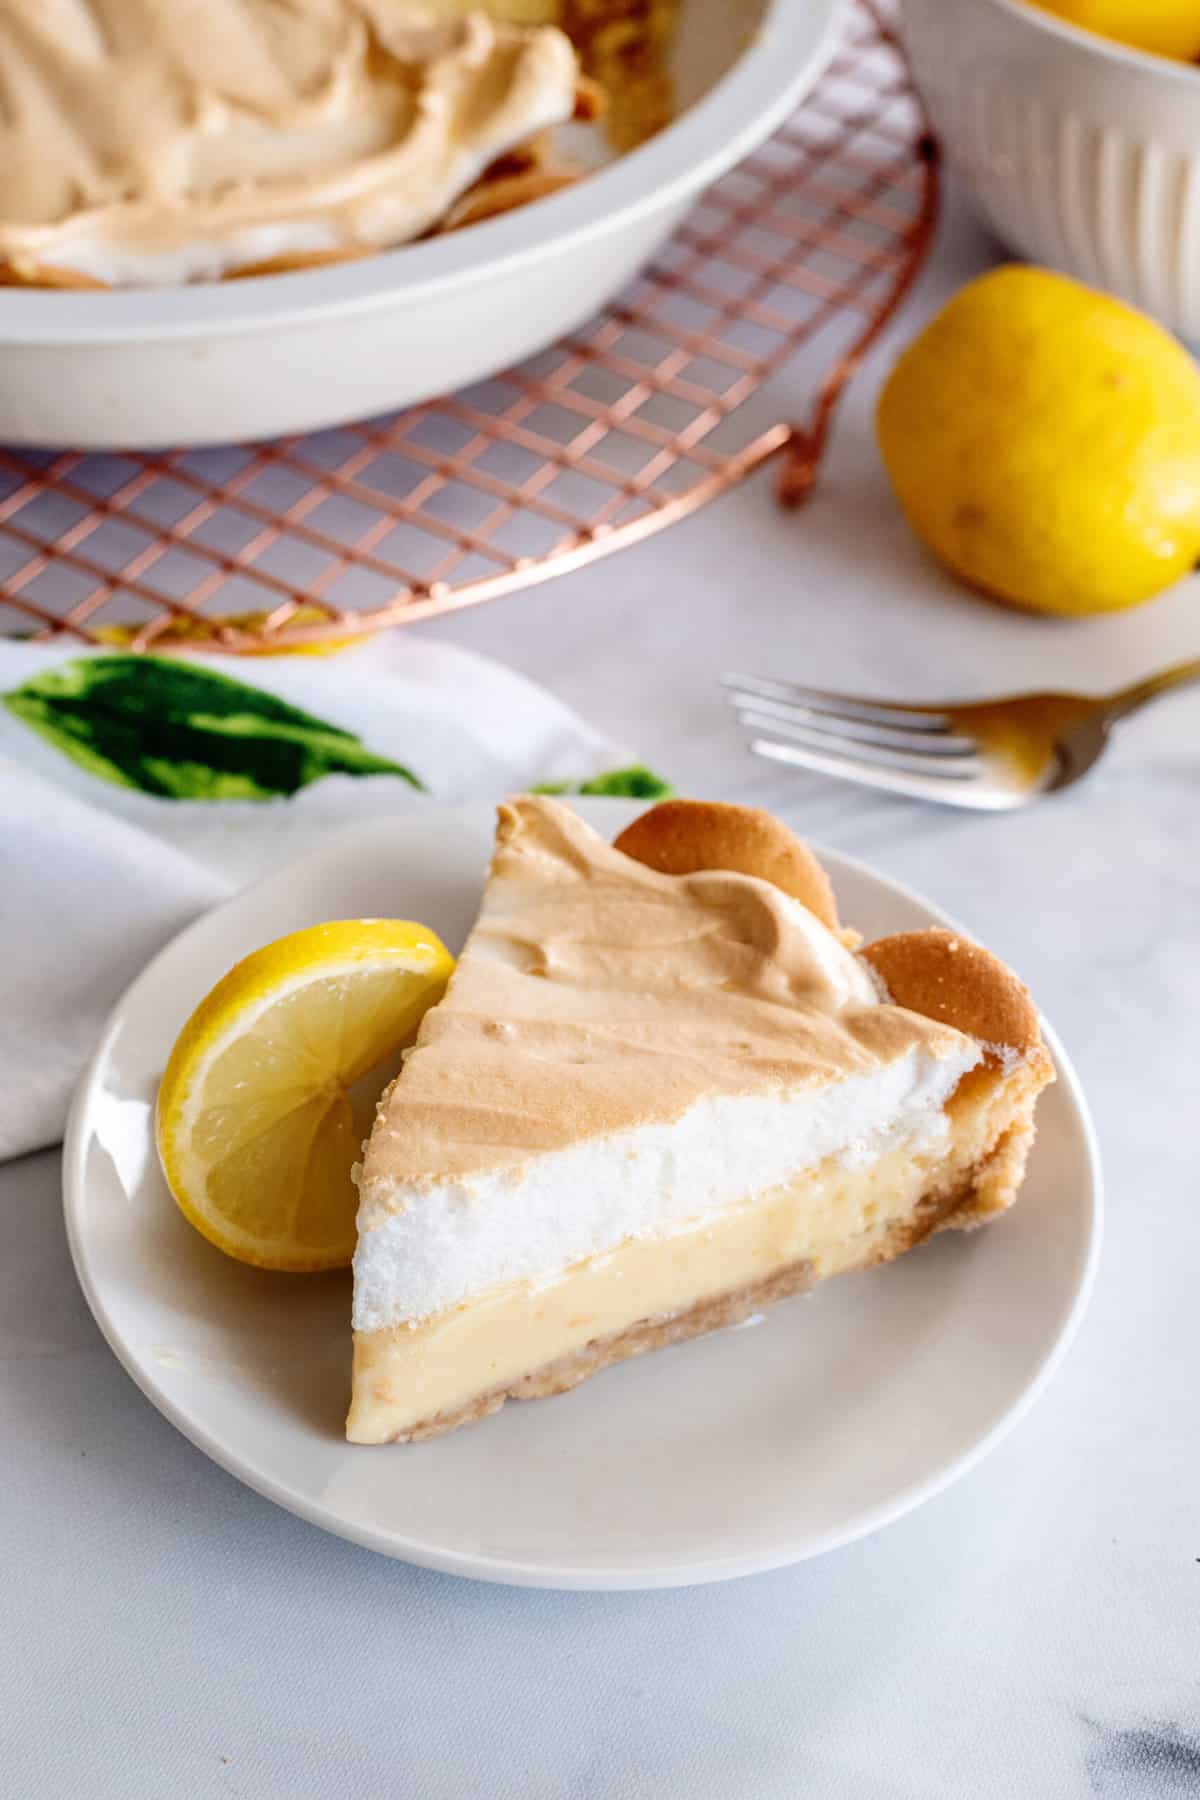 Slice of lemon meringue pie with condensed milk.